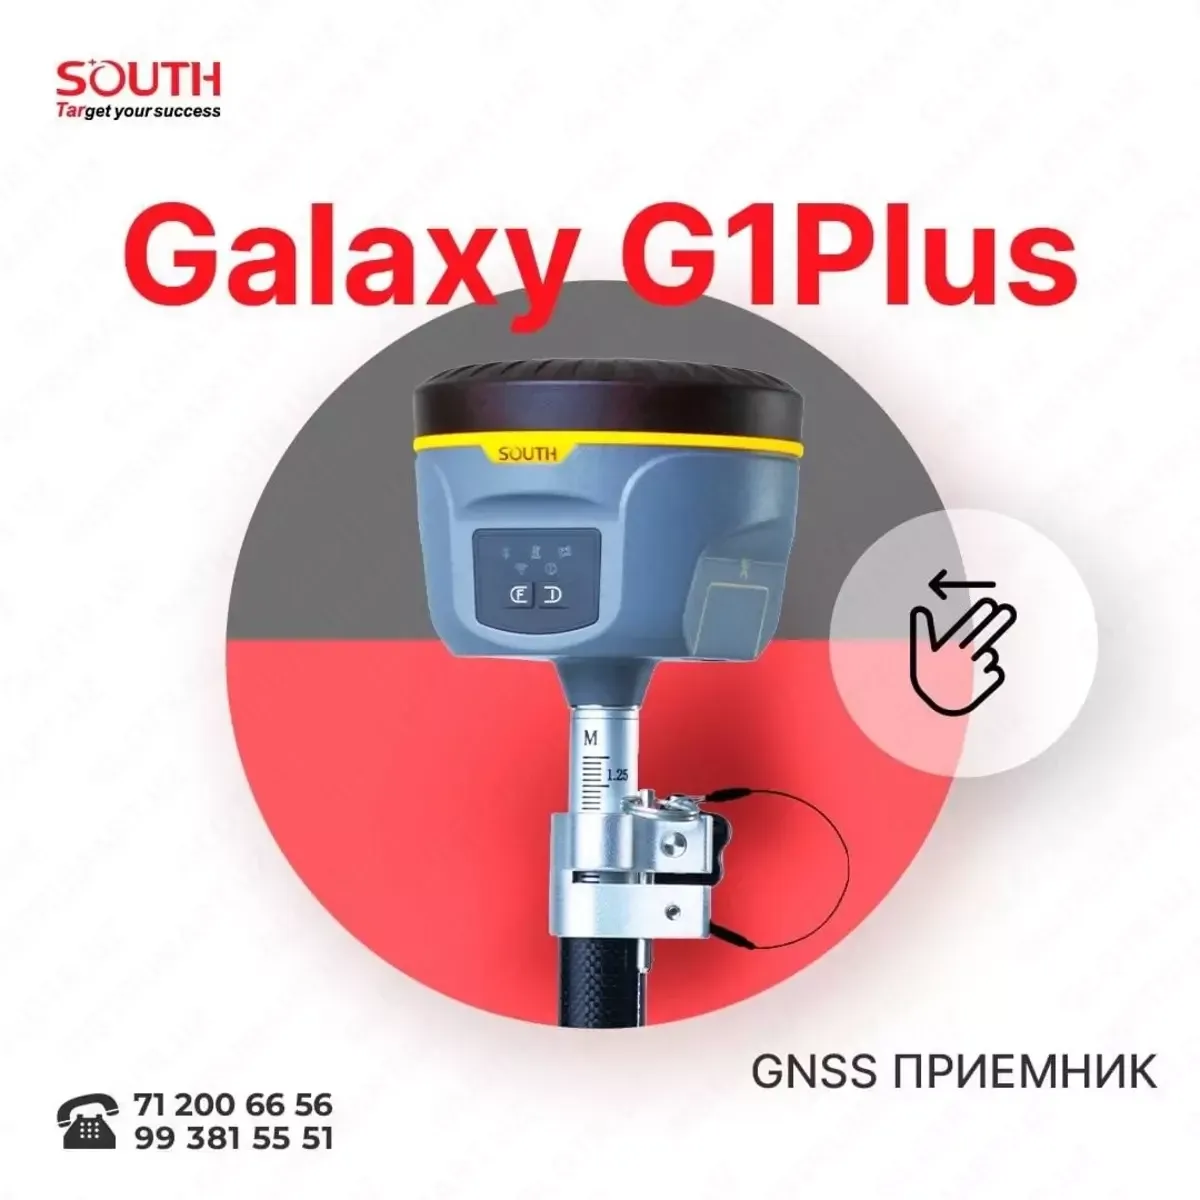 GNSS приемник SOUTH GALAXY G1 +#1